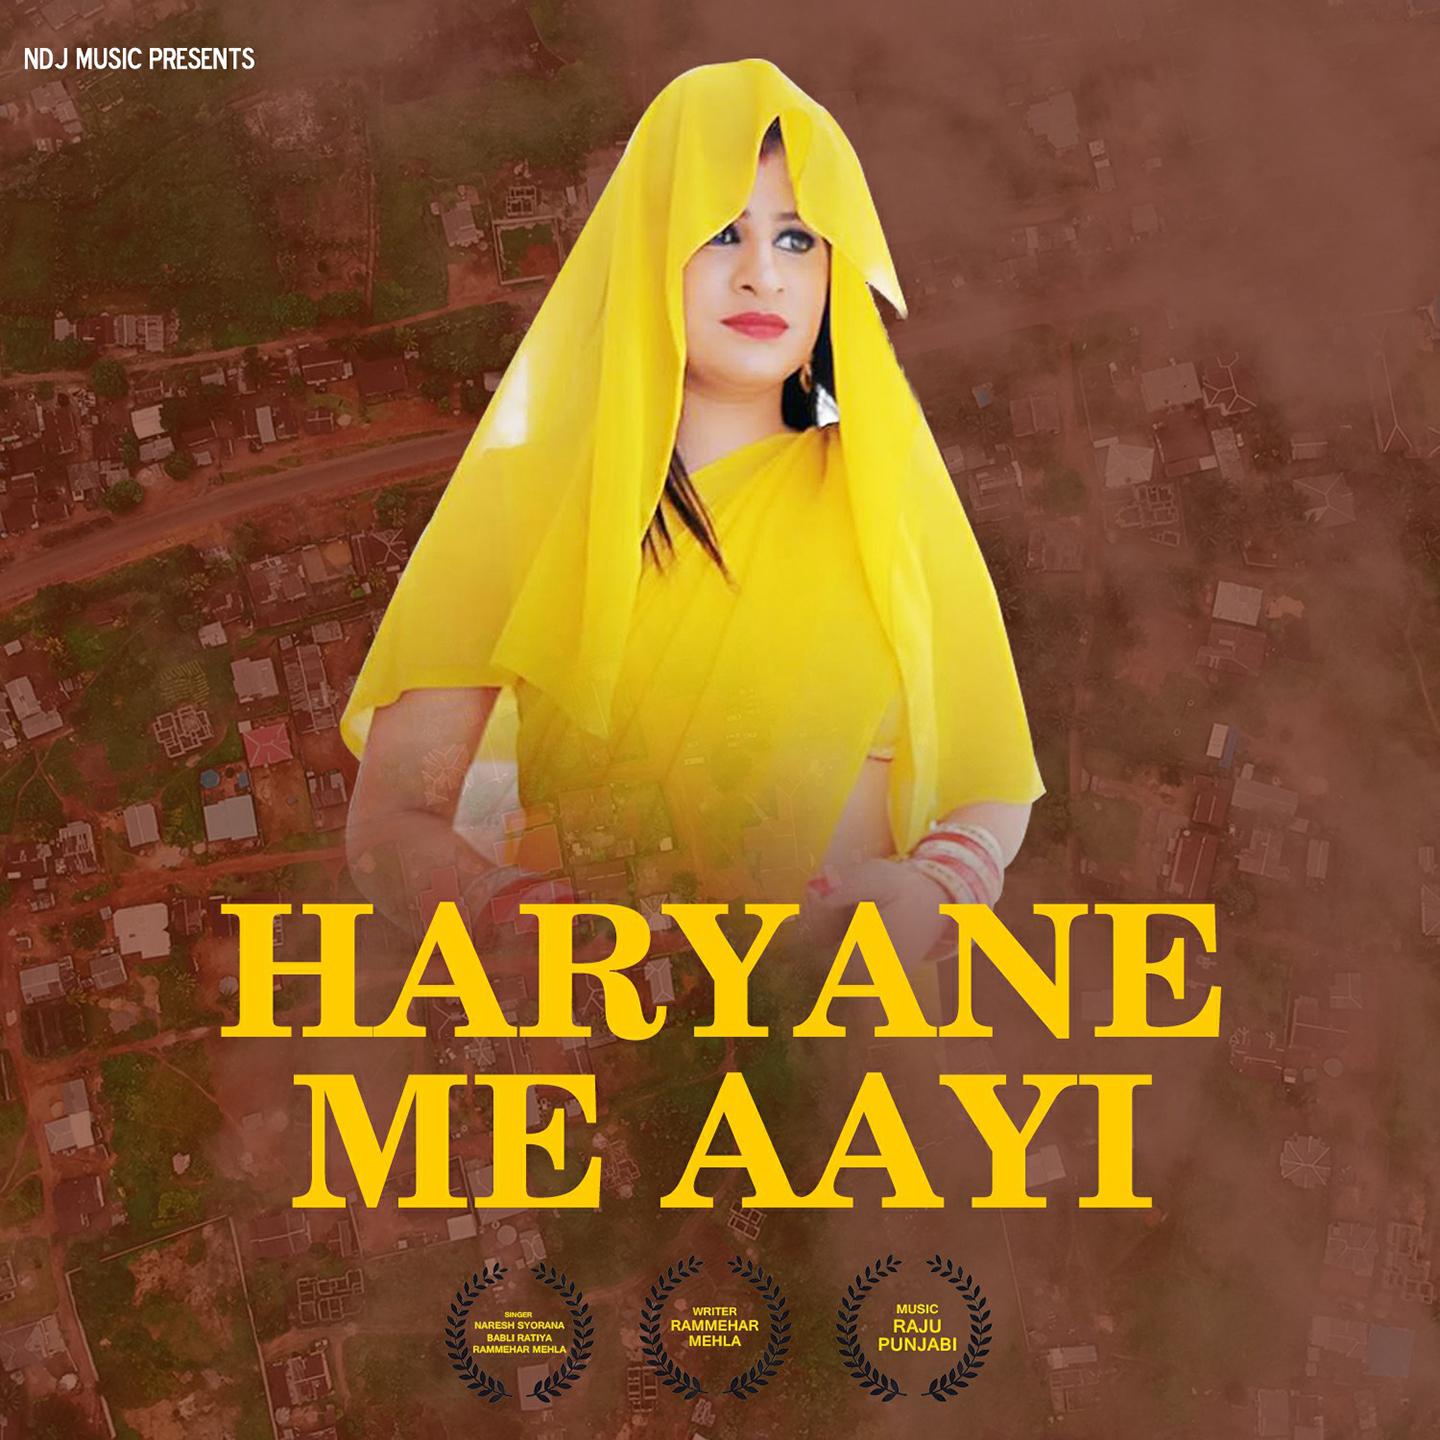 Haryane Me Aayi